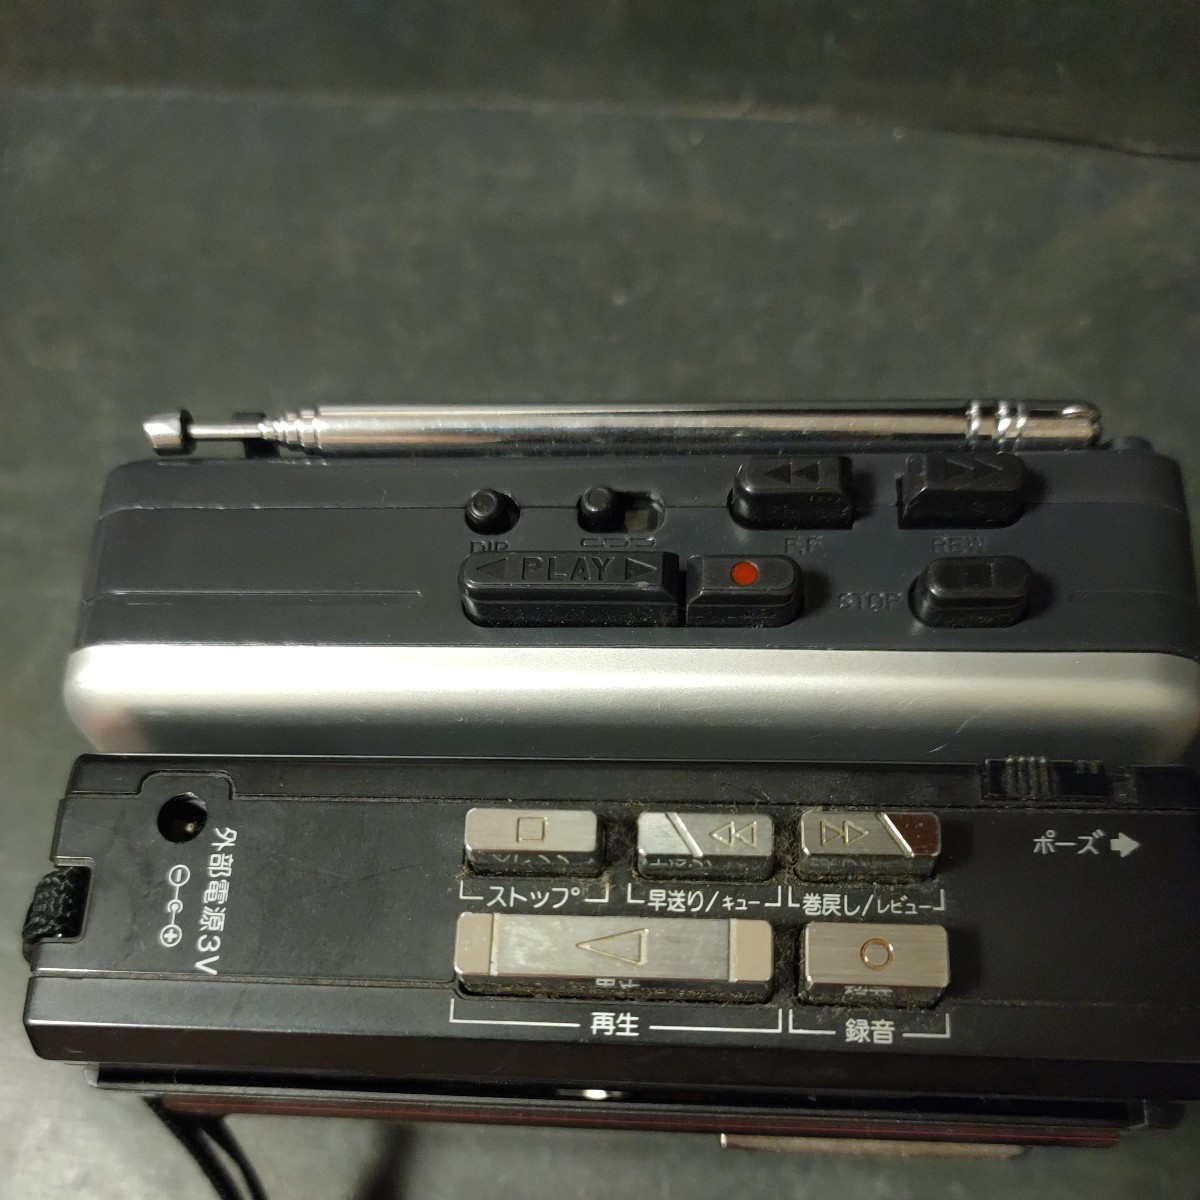  cassette recorder 2 piece 